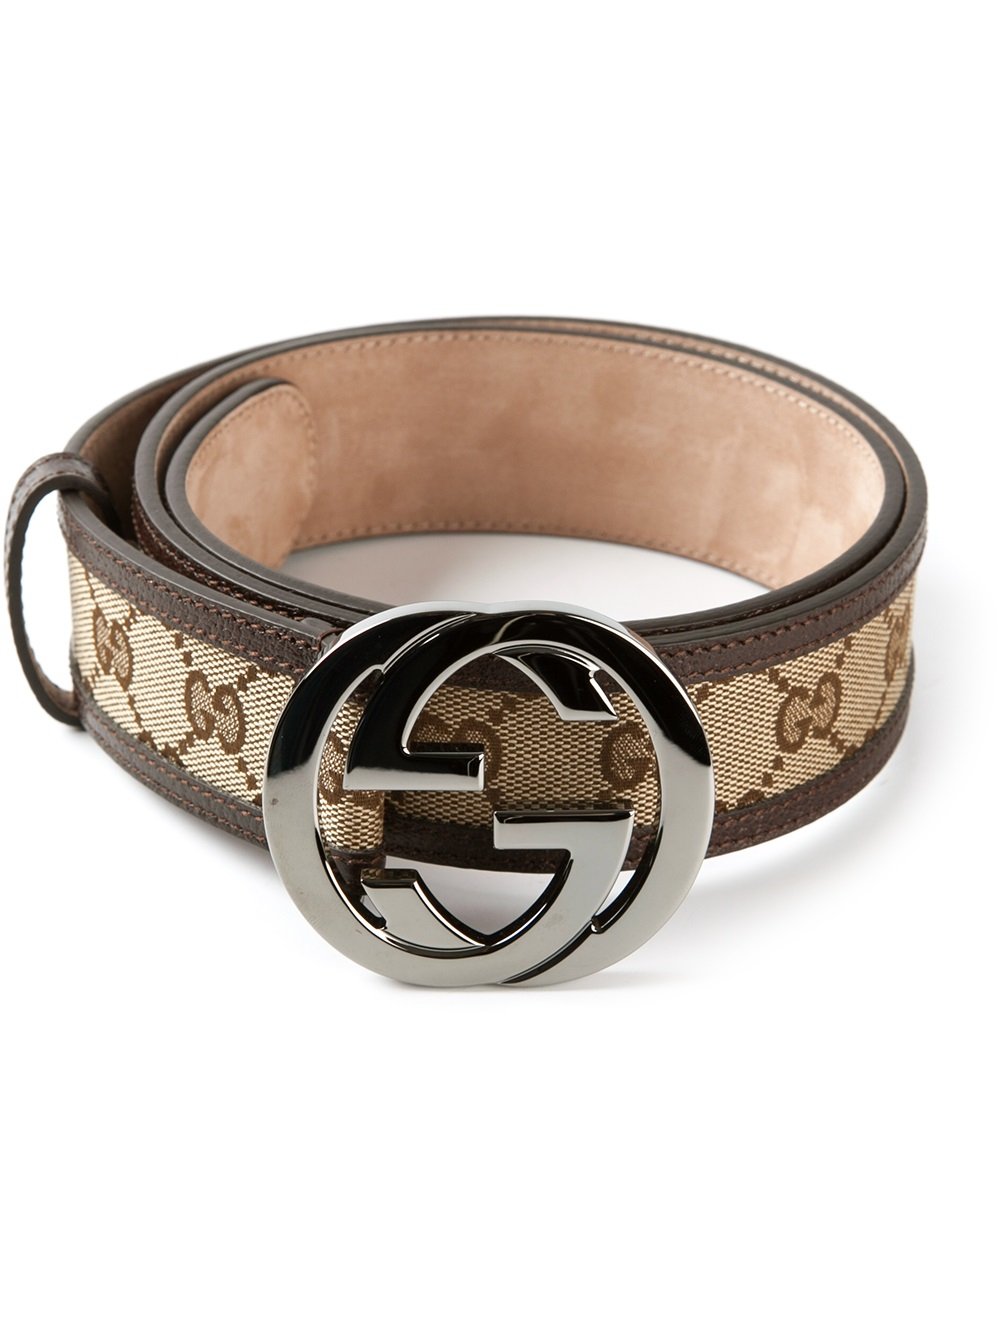 Gucci Monogram Belt in Brown for Men - Lyst